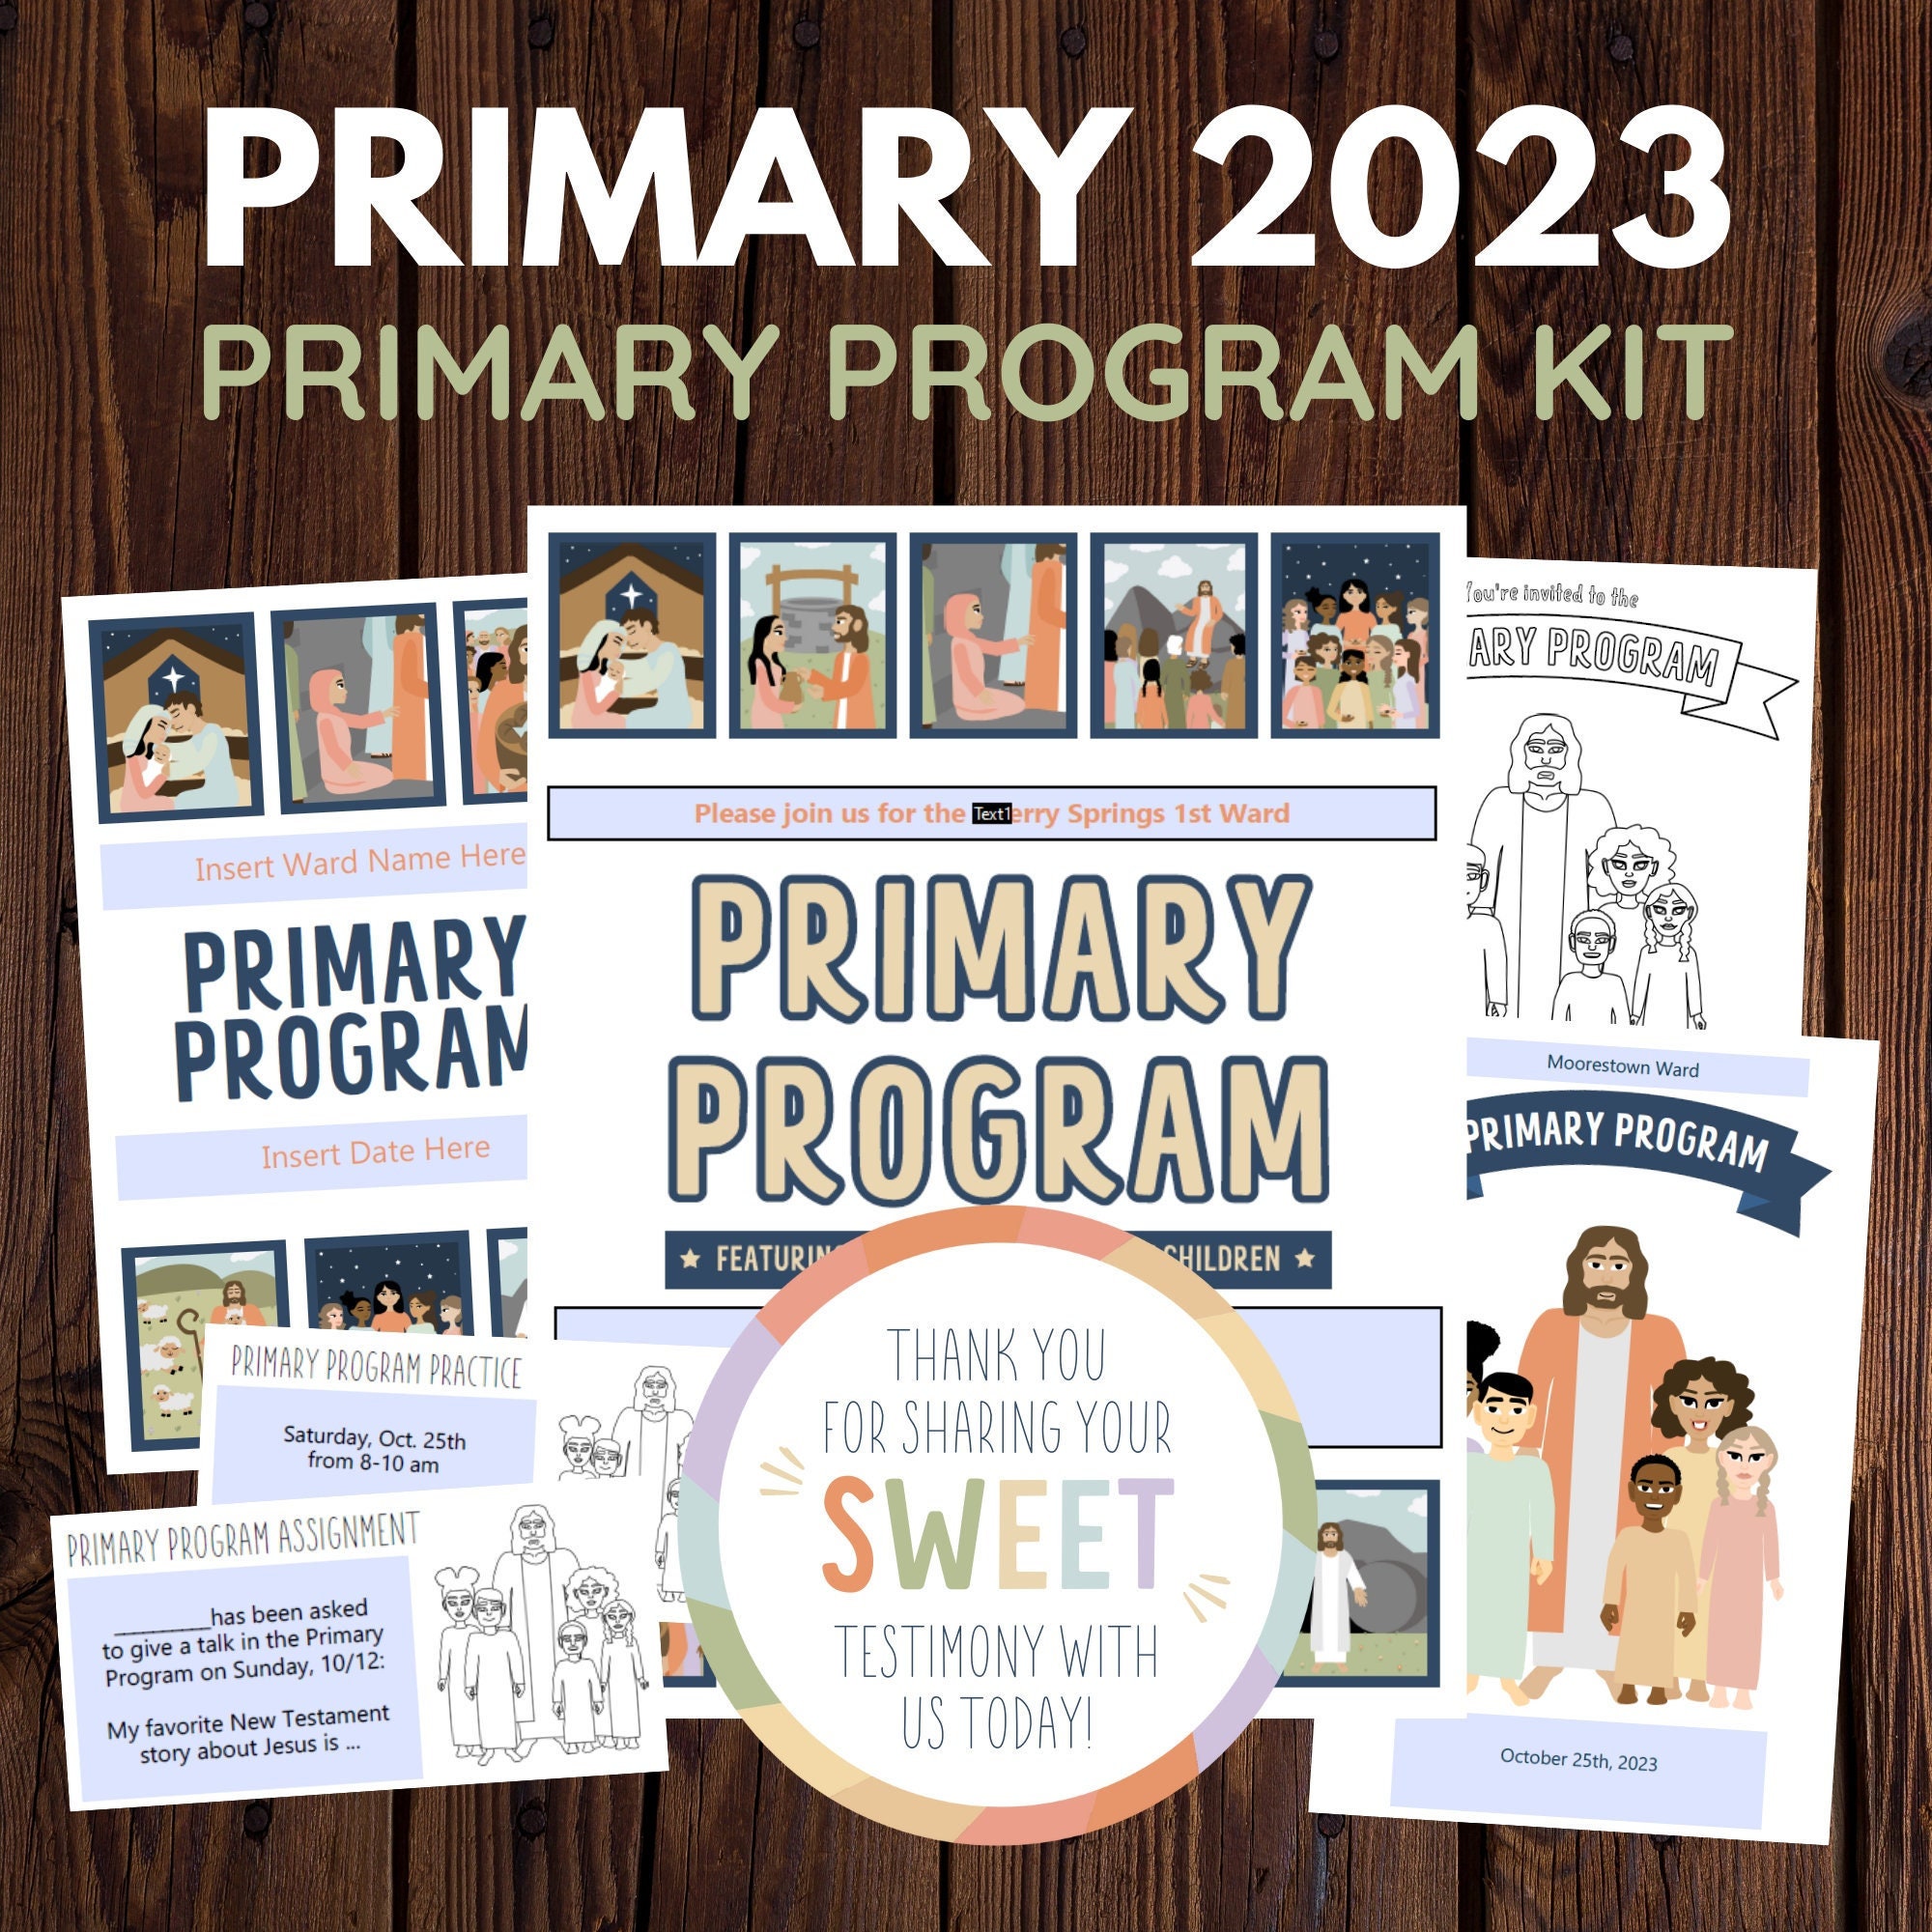 2023 New Testament Primary Program Presentation